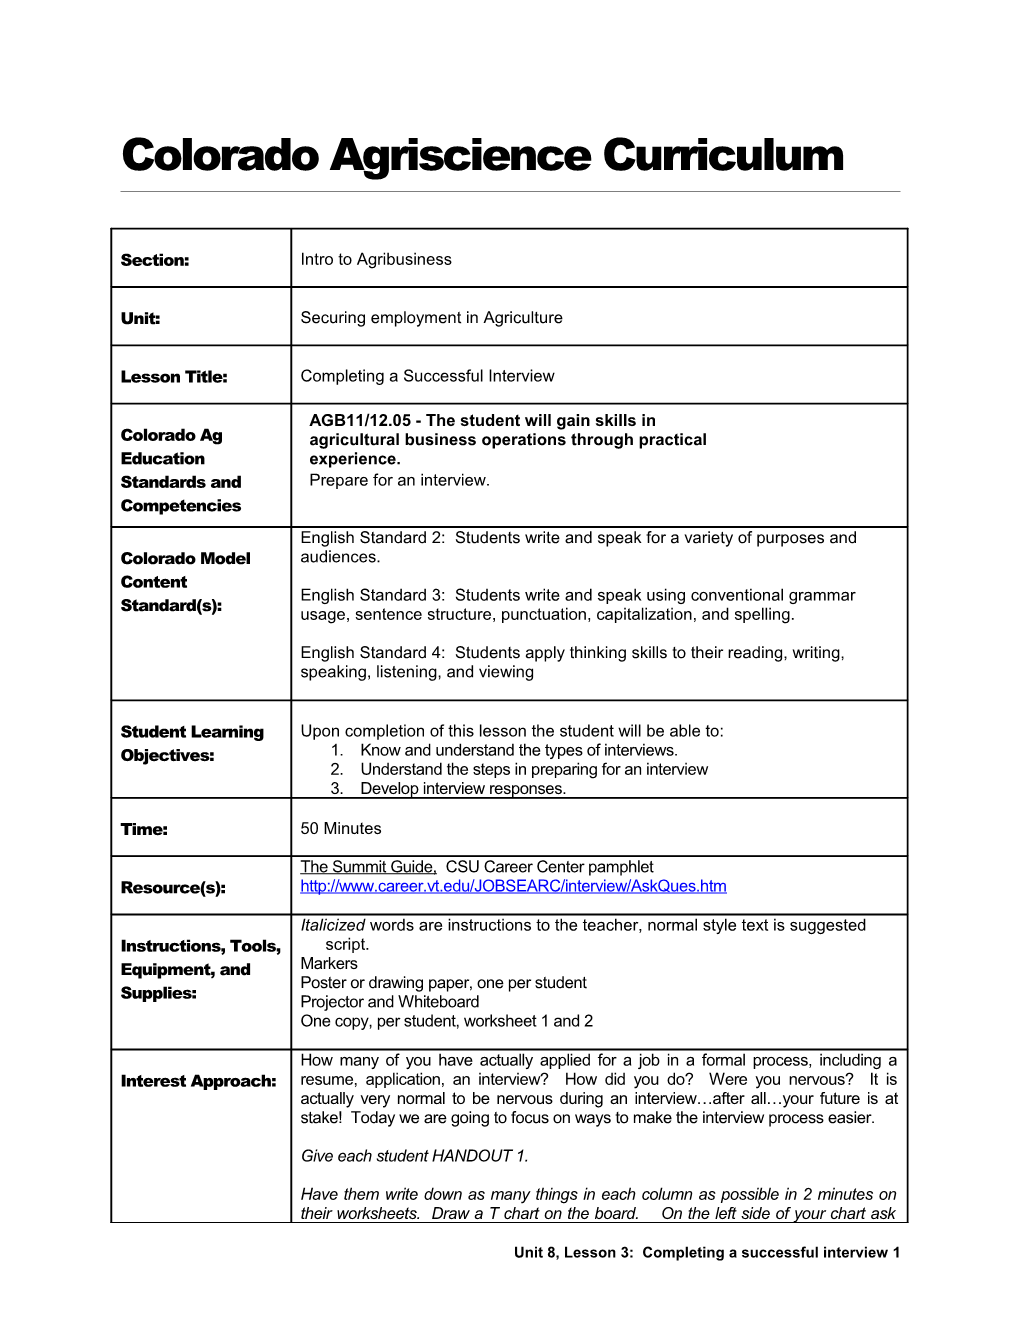 Colorado Agriscience Curriculum s3